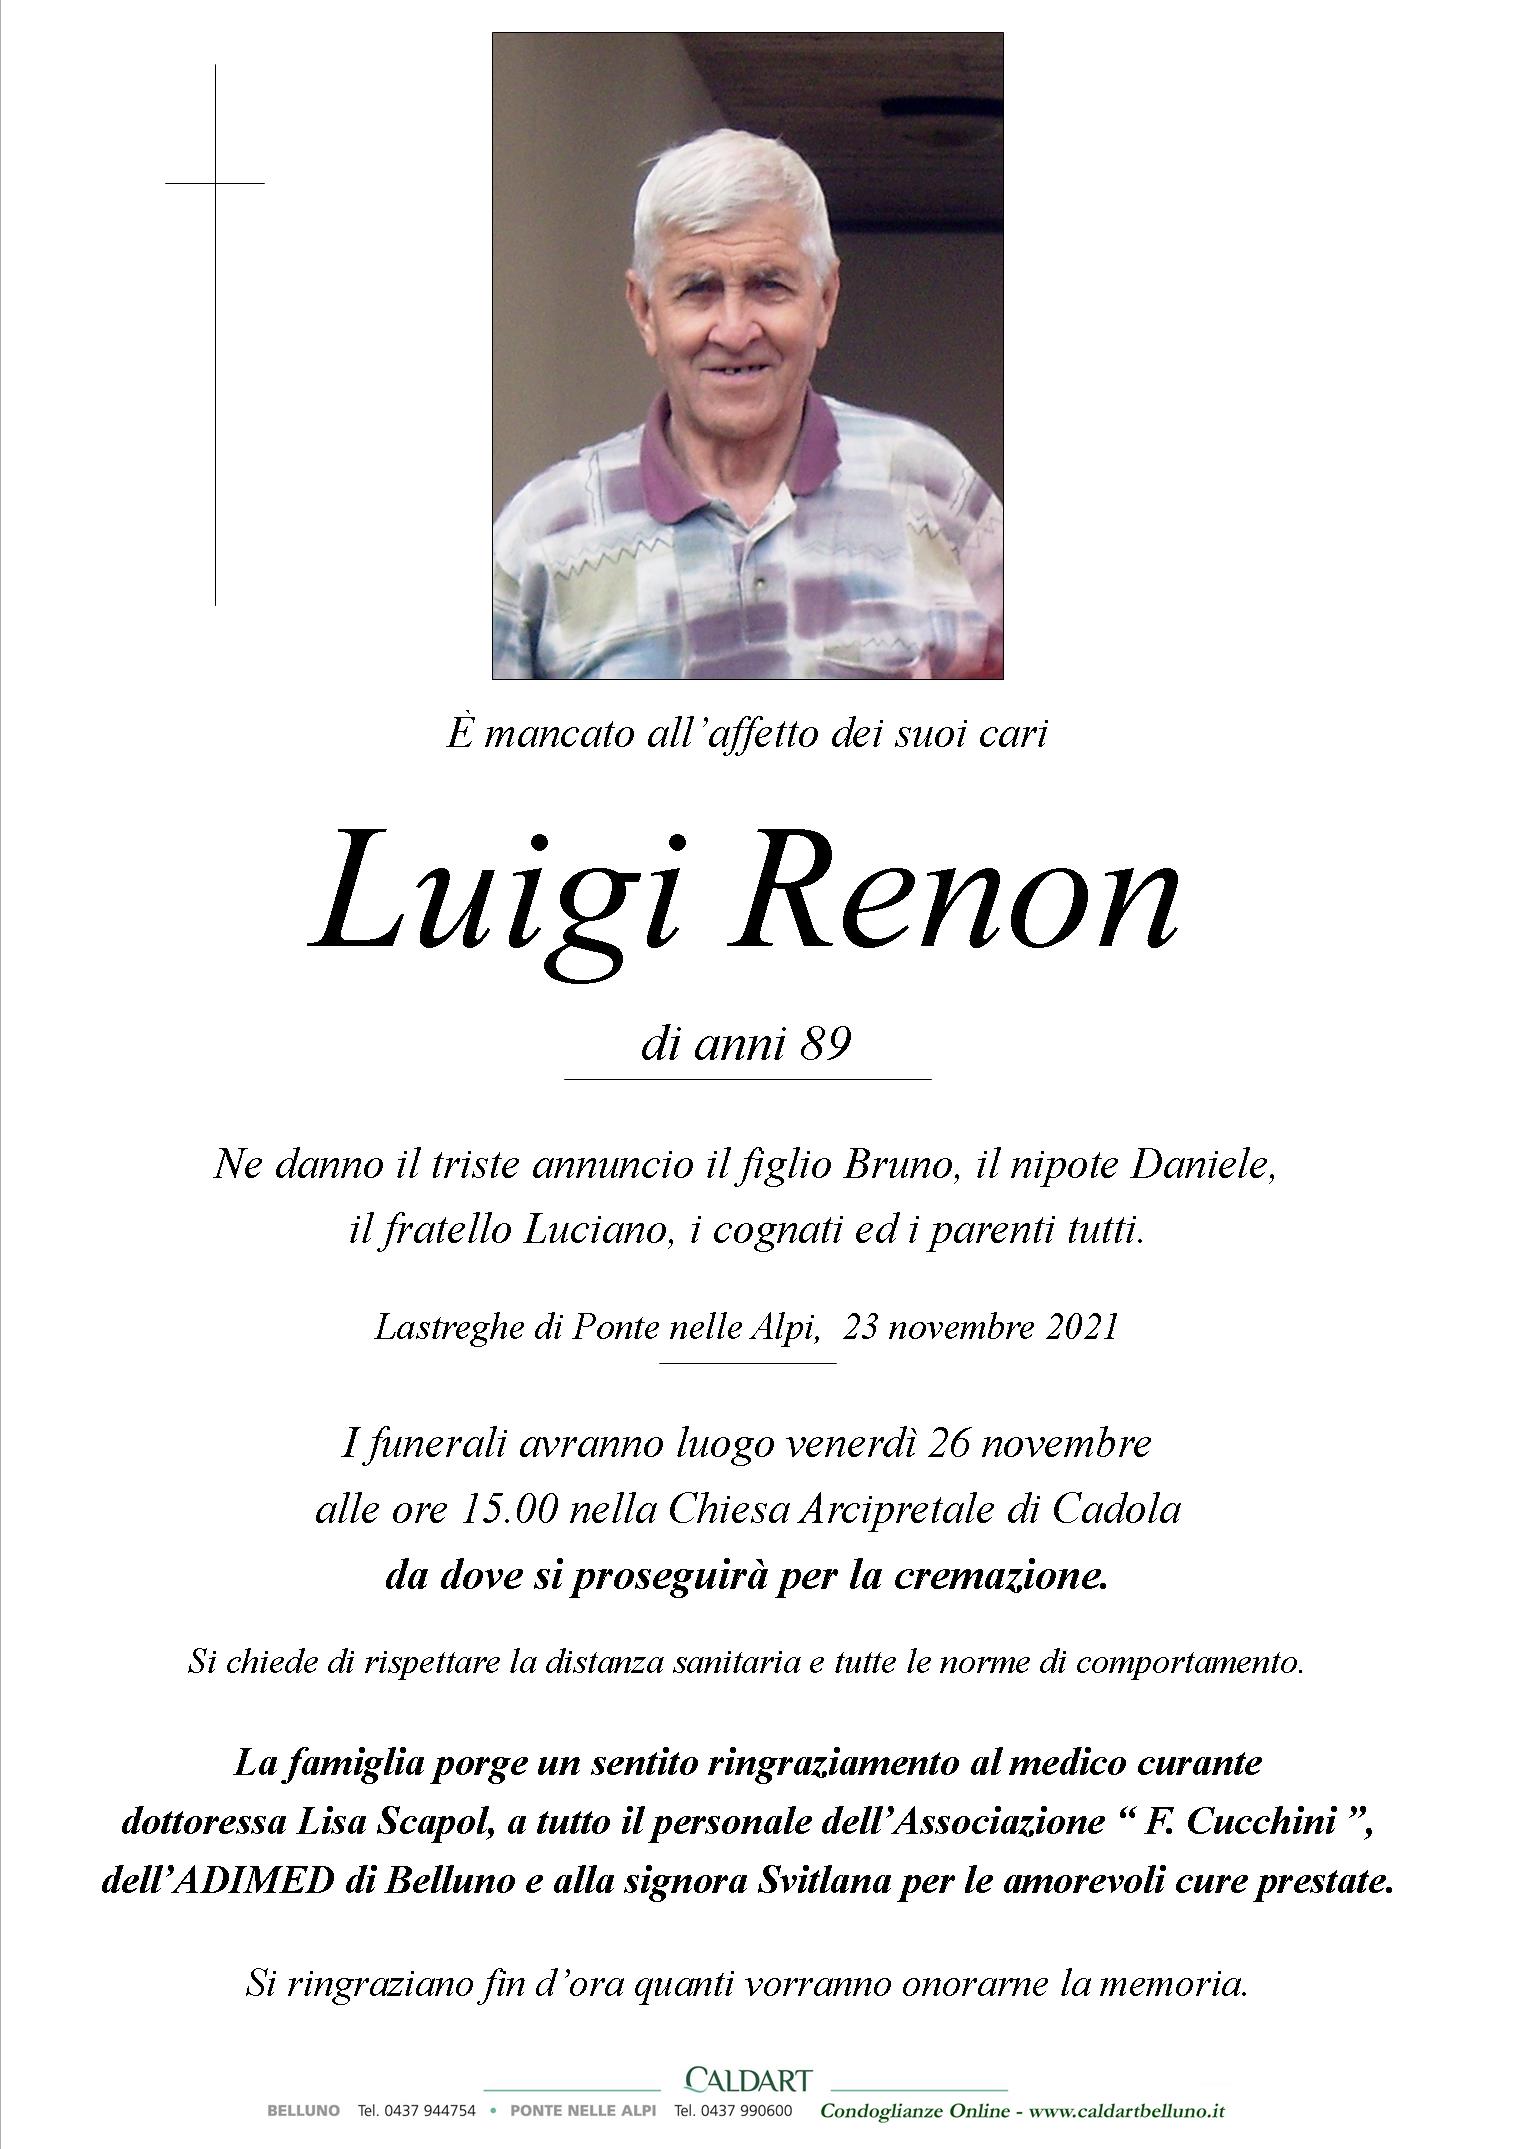 Renon Luigi